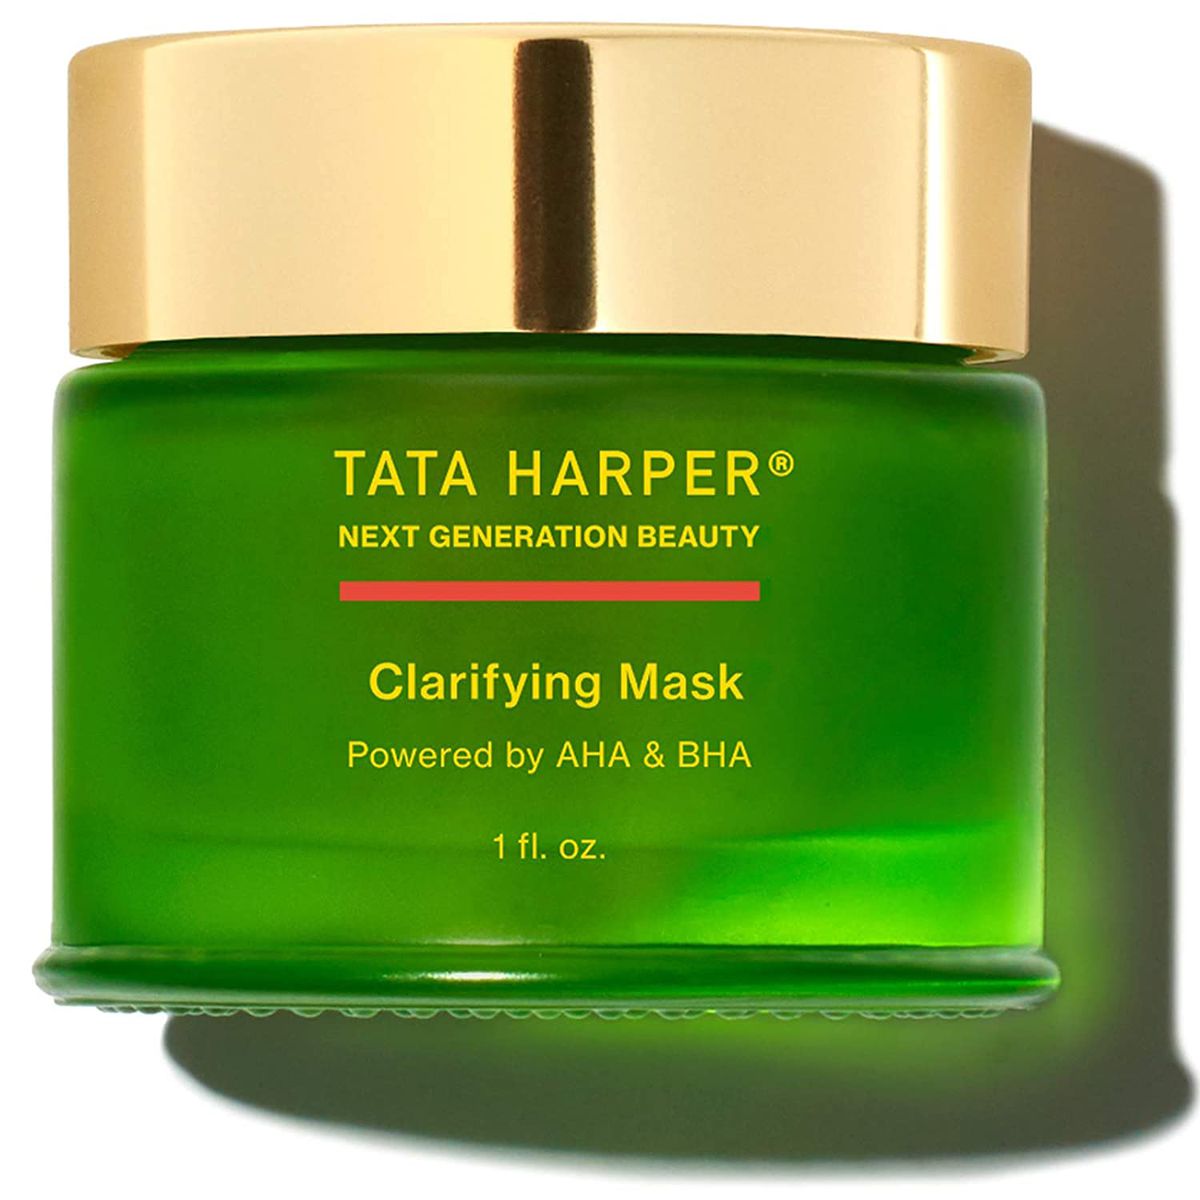 Tata Harper skincare